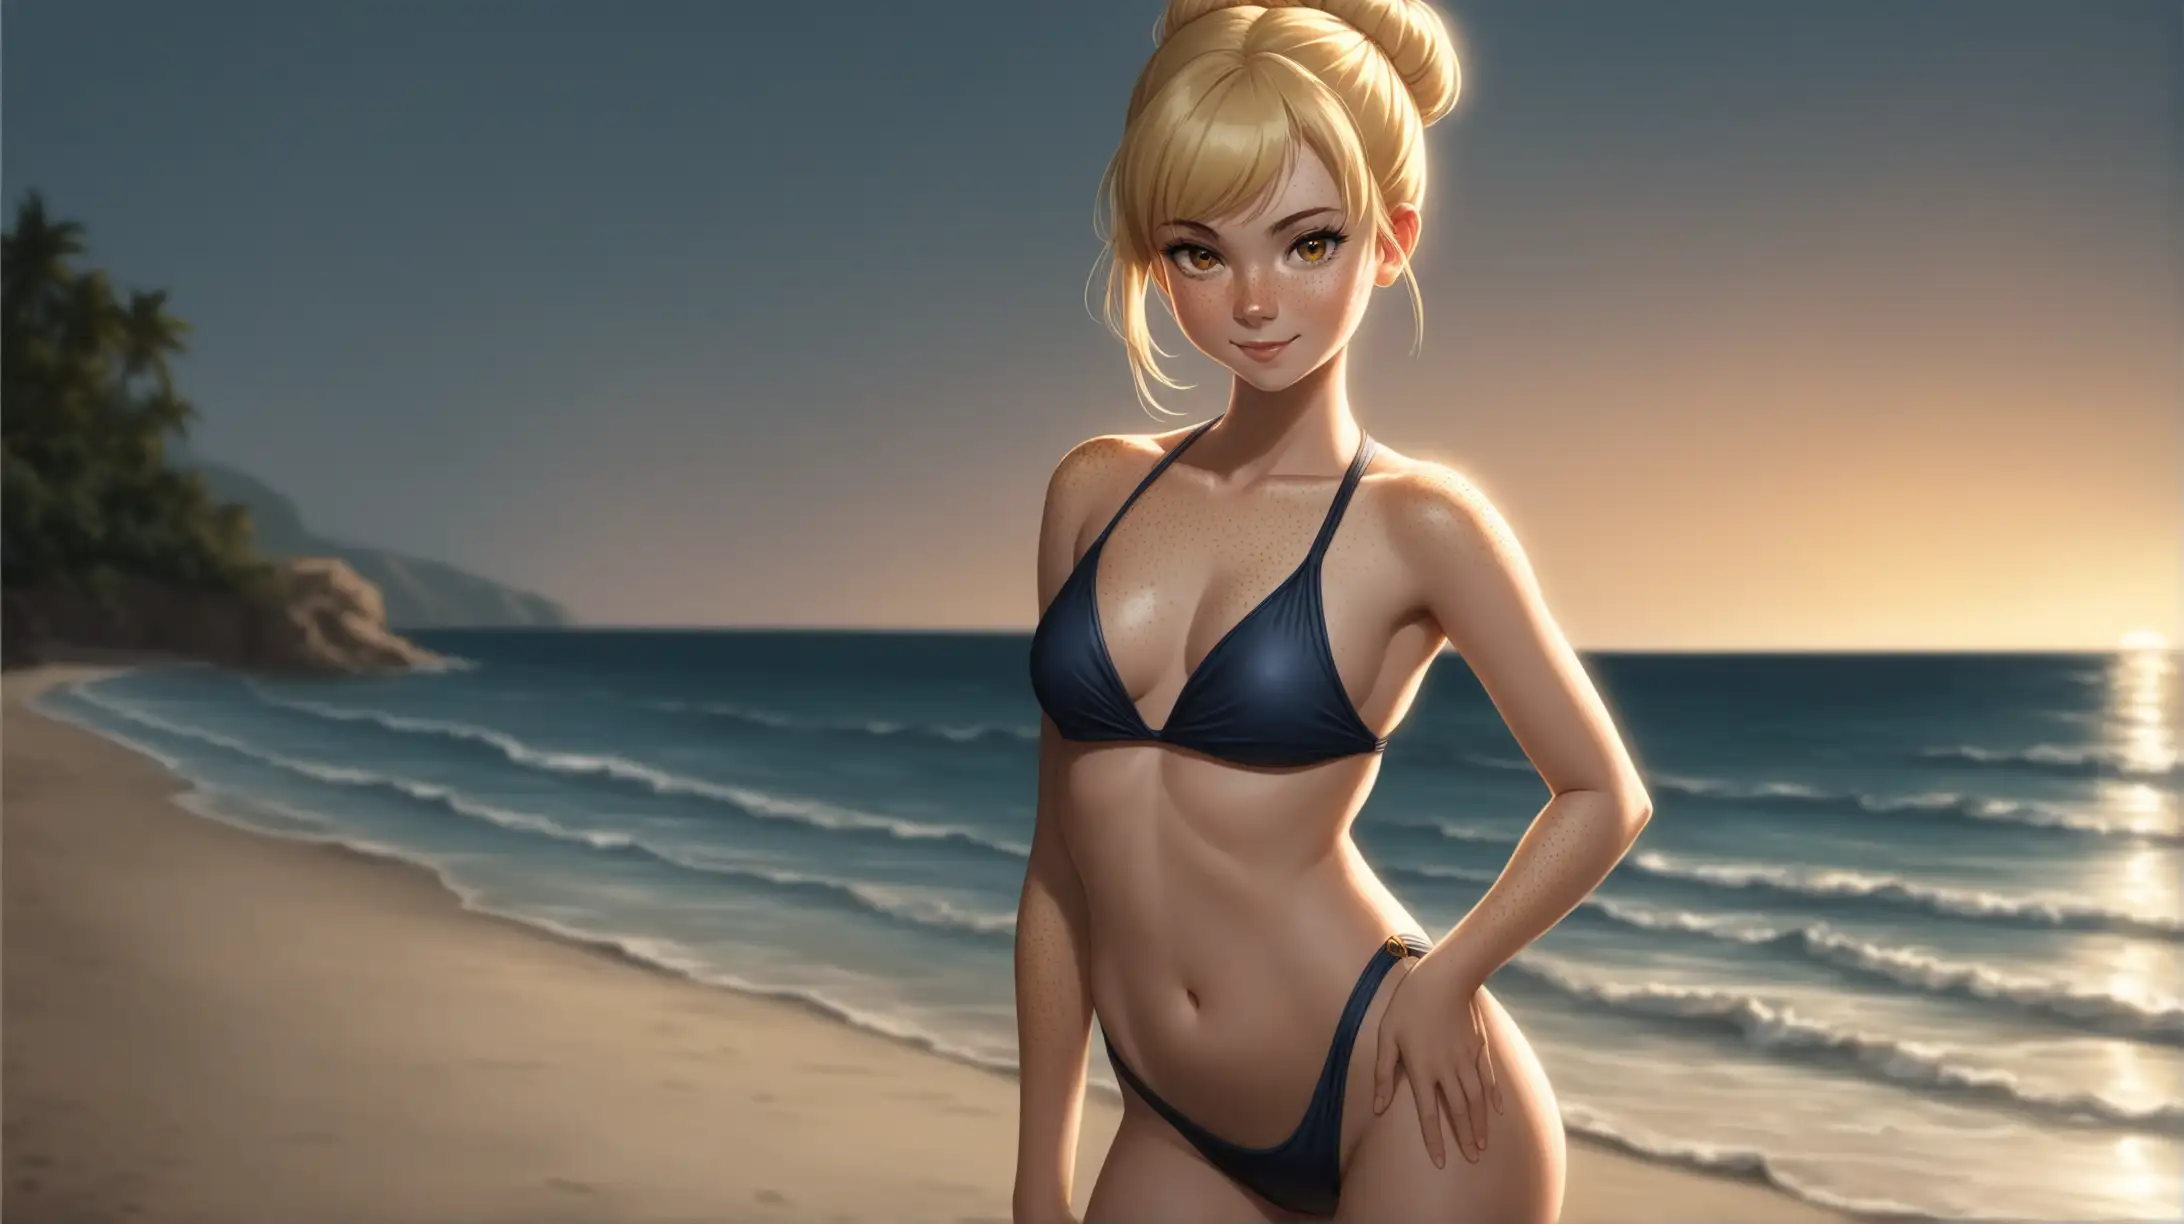 Blonde Woman in Seductive Beach Pose